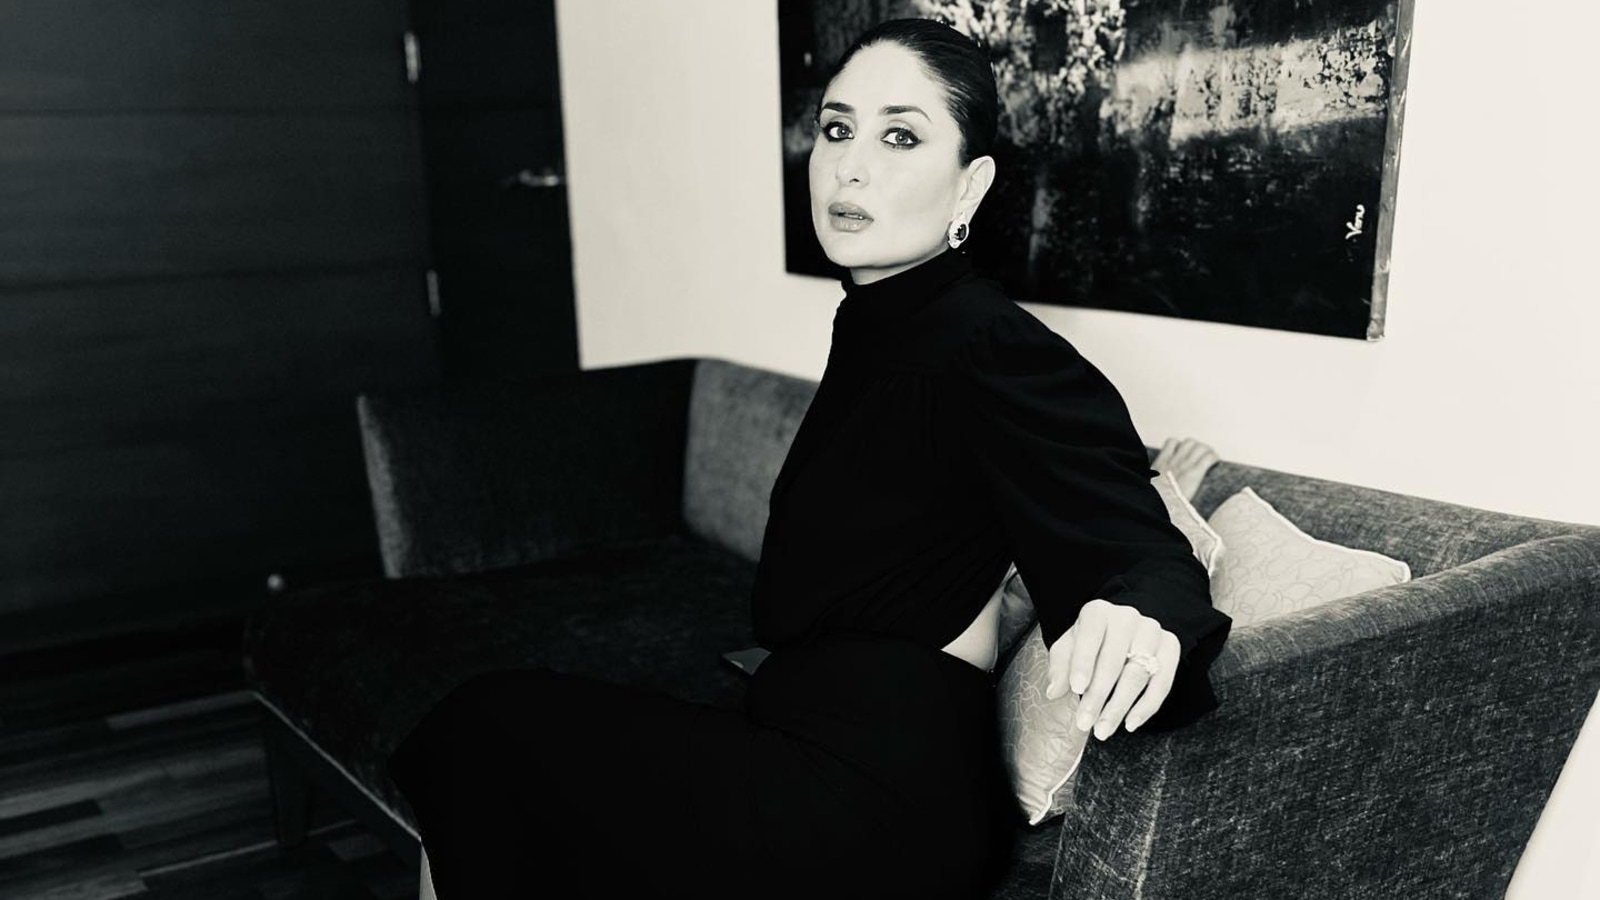 Kareena Kapoor Nangi Video - Kareena Kapoor shares pics as she dresses up in black for event, fans react  | Bollywood - Hindustan Times